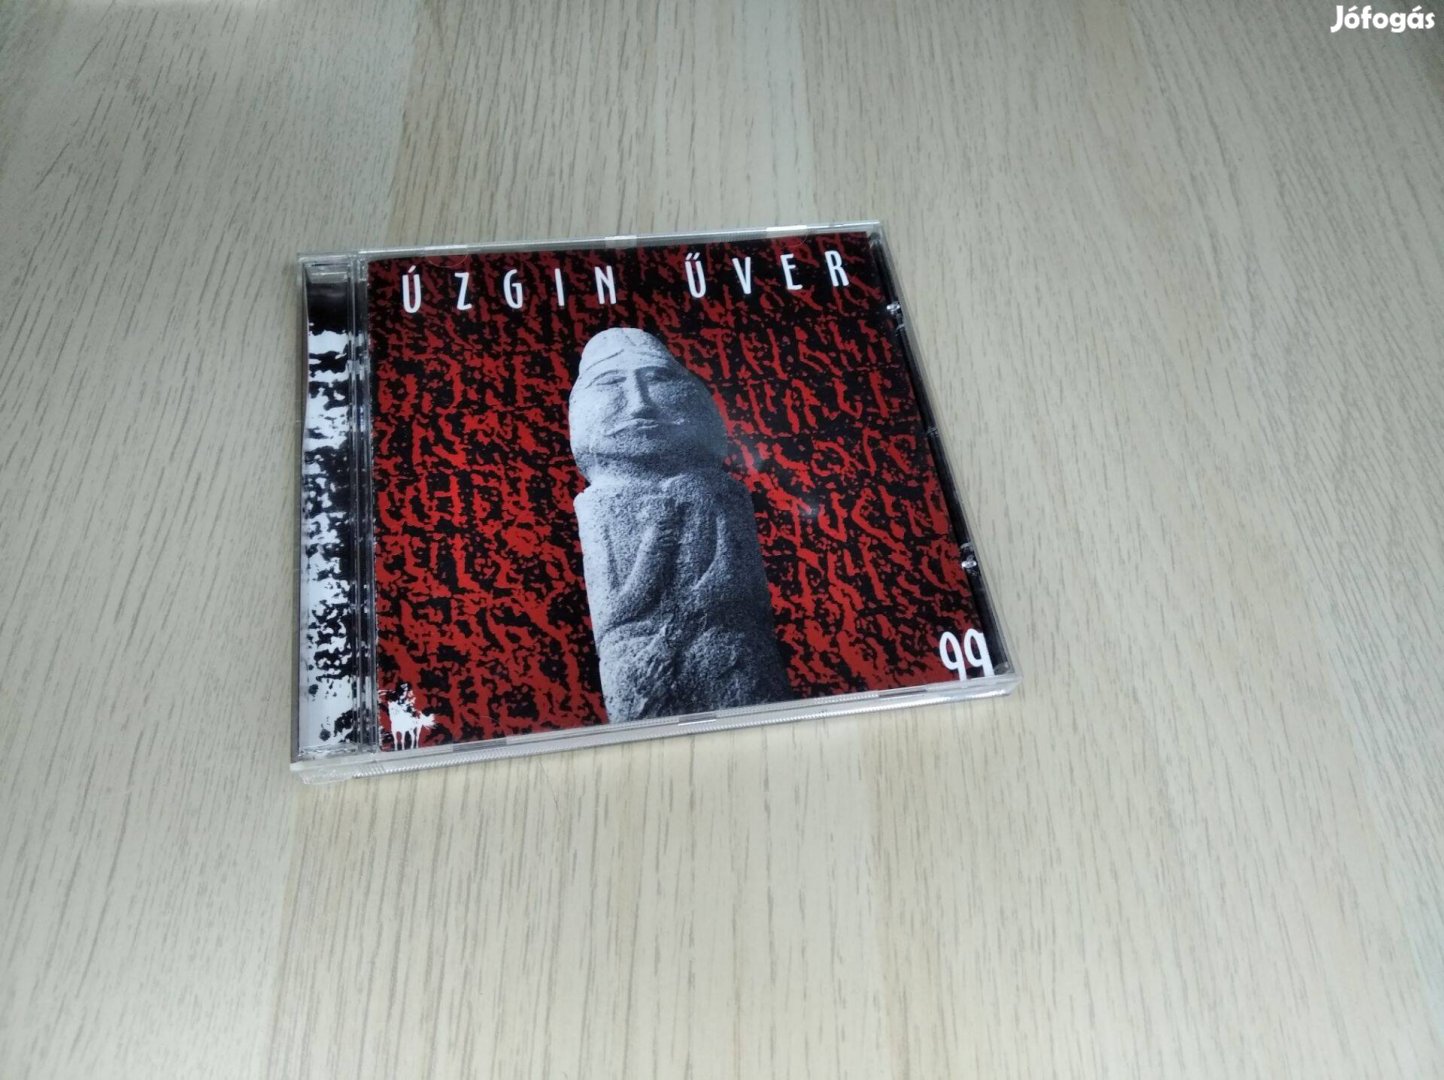 Úzgin Űver - 99 / CD 1999